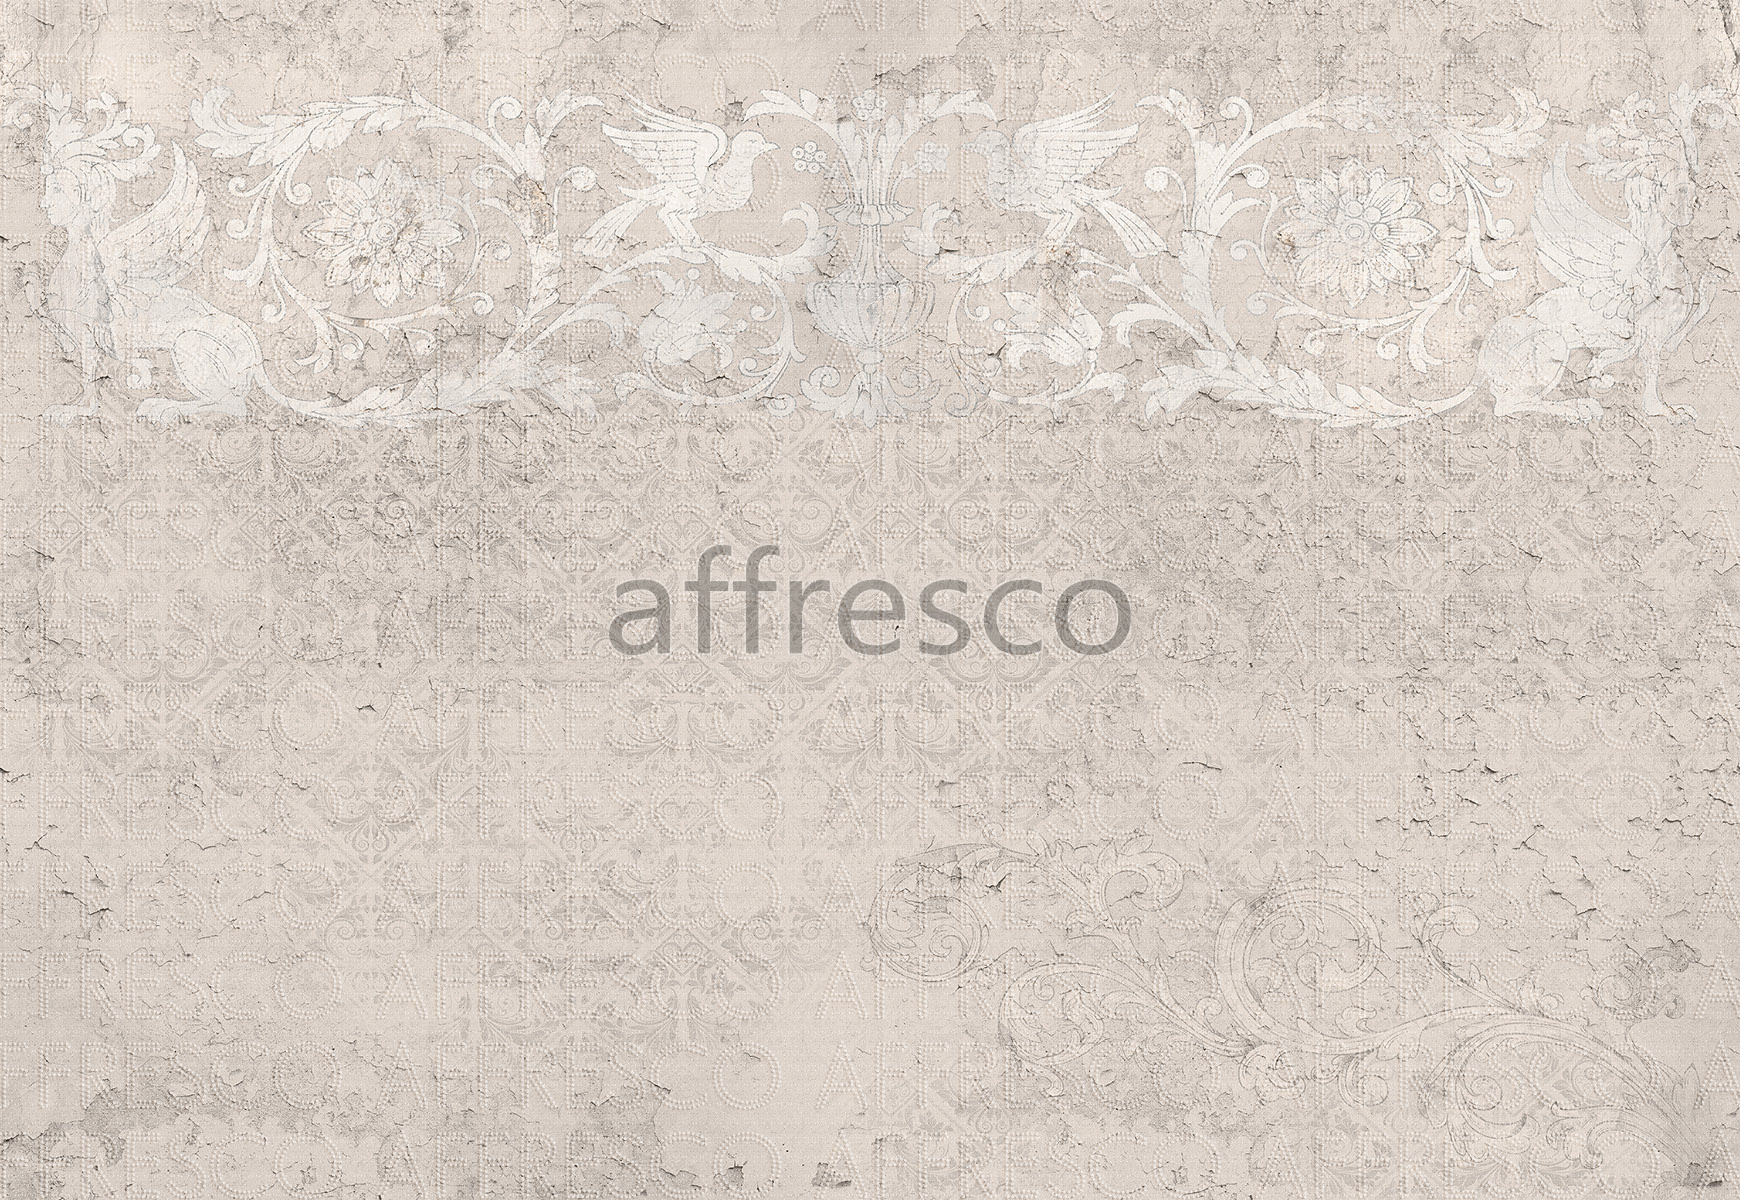 ID136199 | Textures |  | Affresco Factory